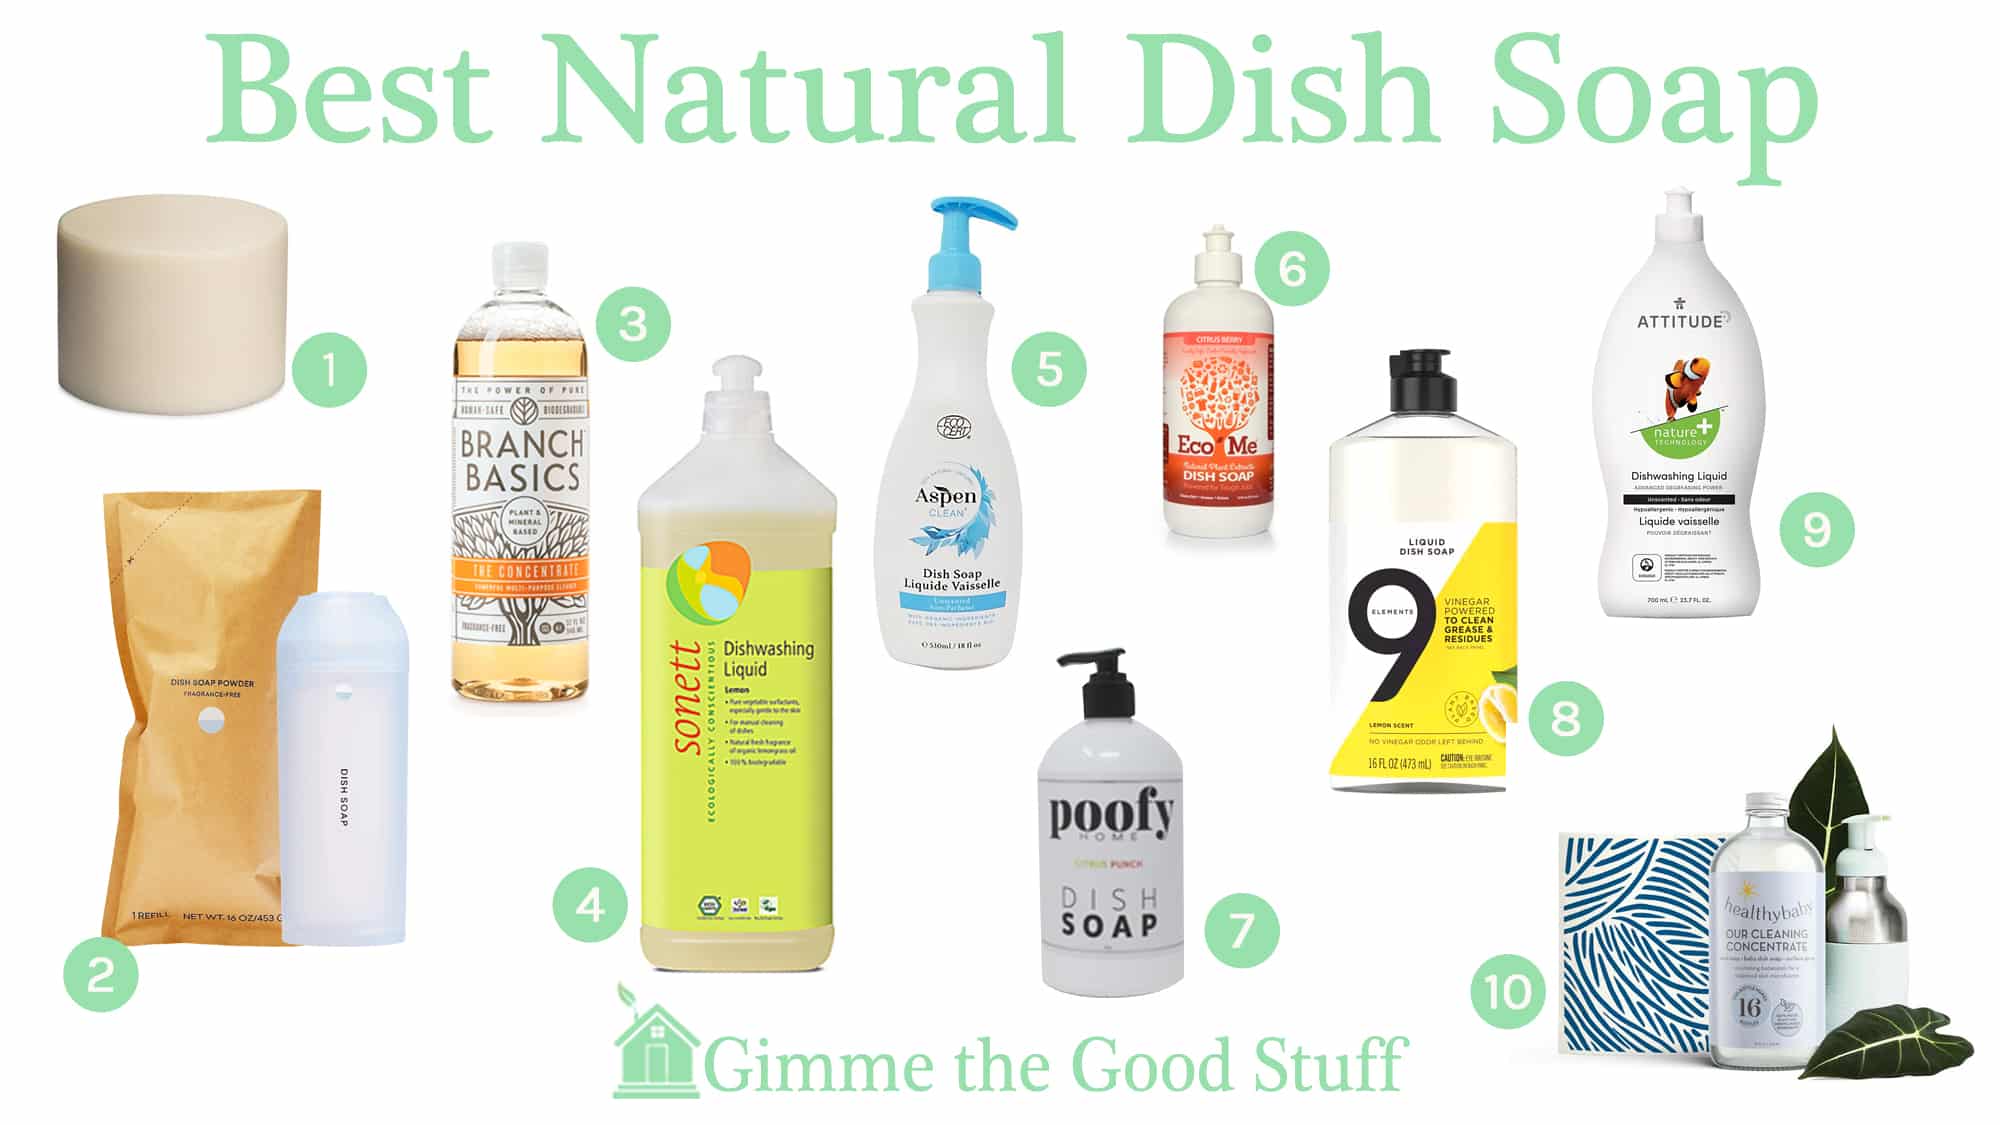 Ten Great Uses of Dawn Dish Soap